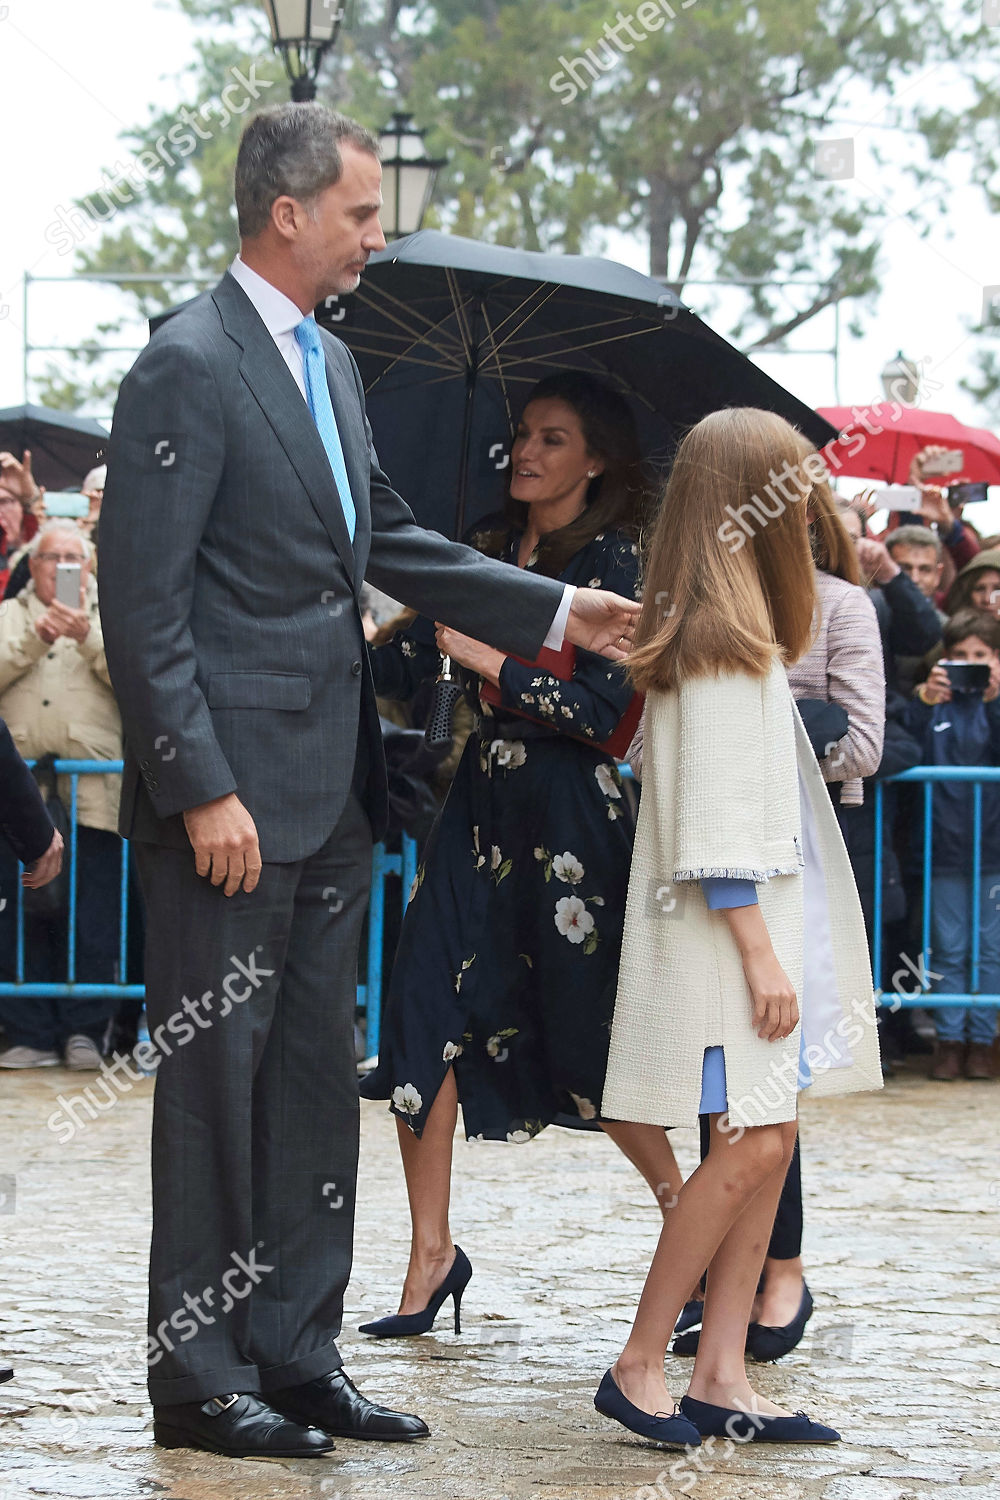 royal-family-attends-mass-in-majorca-palma-de-mallorca-spain-shutterstock-editorial-10215609bf.jpg